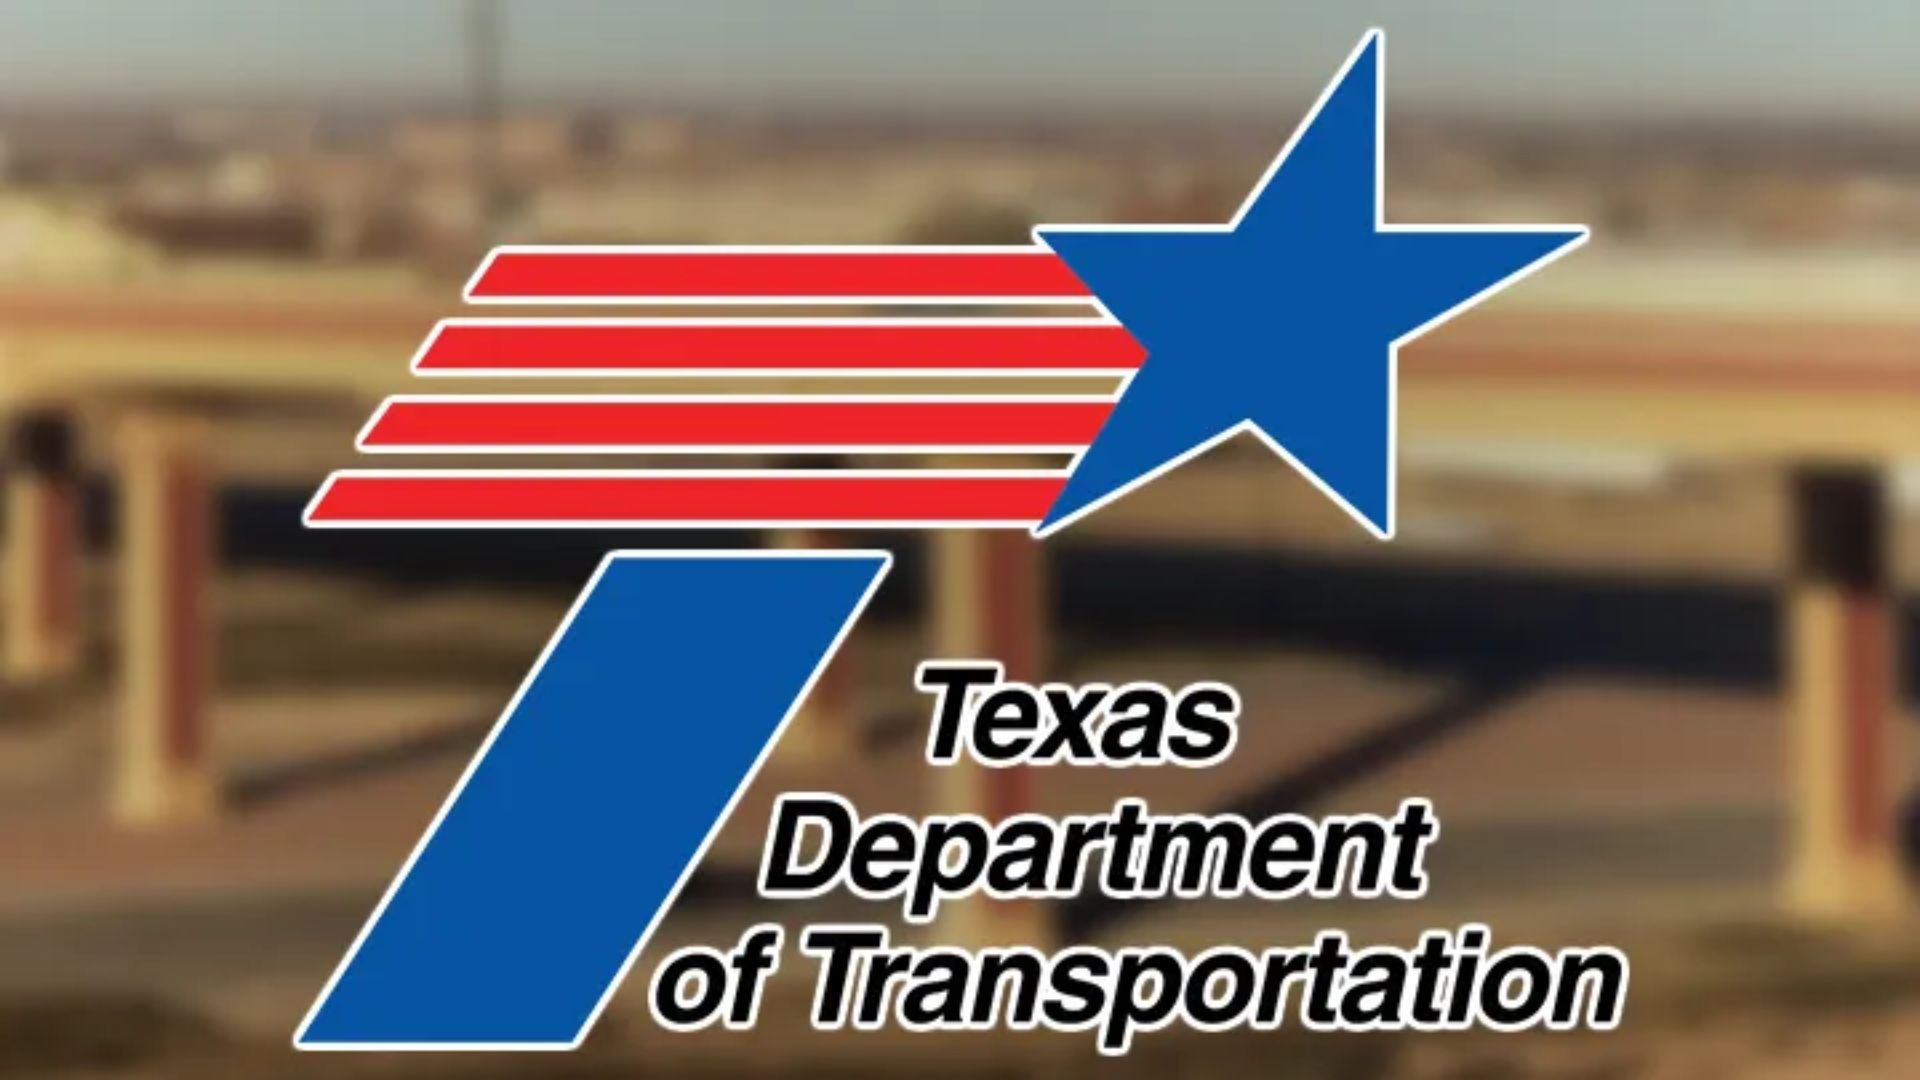 Better connection between Austin and San Antonio through the I-35 corridor, TxDOT wants public input